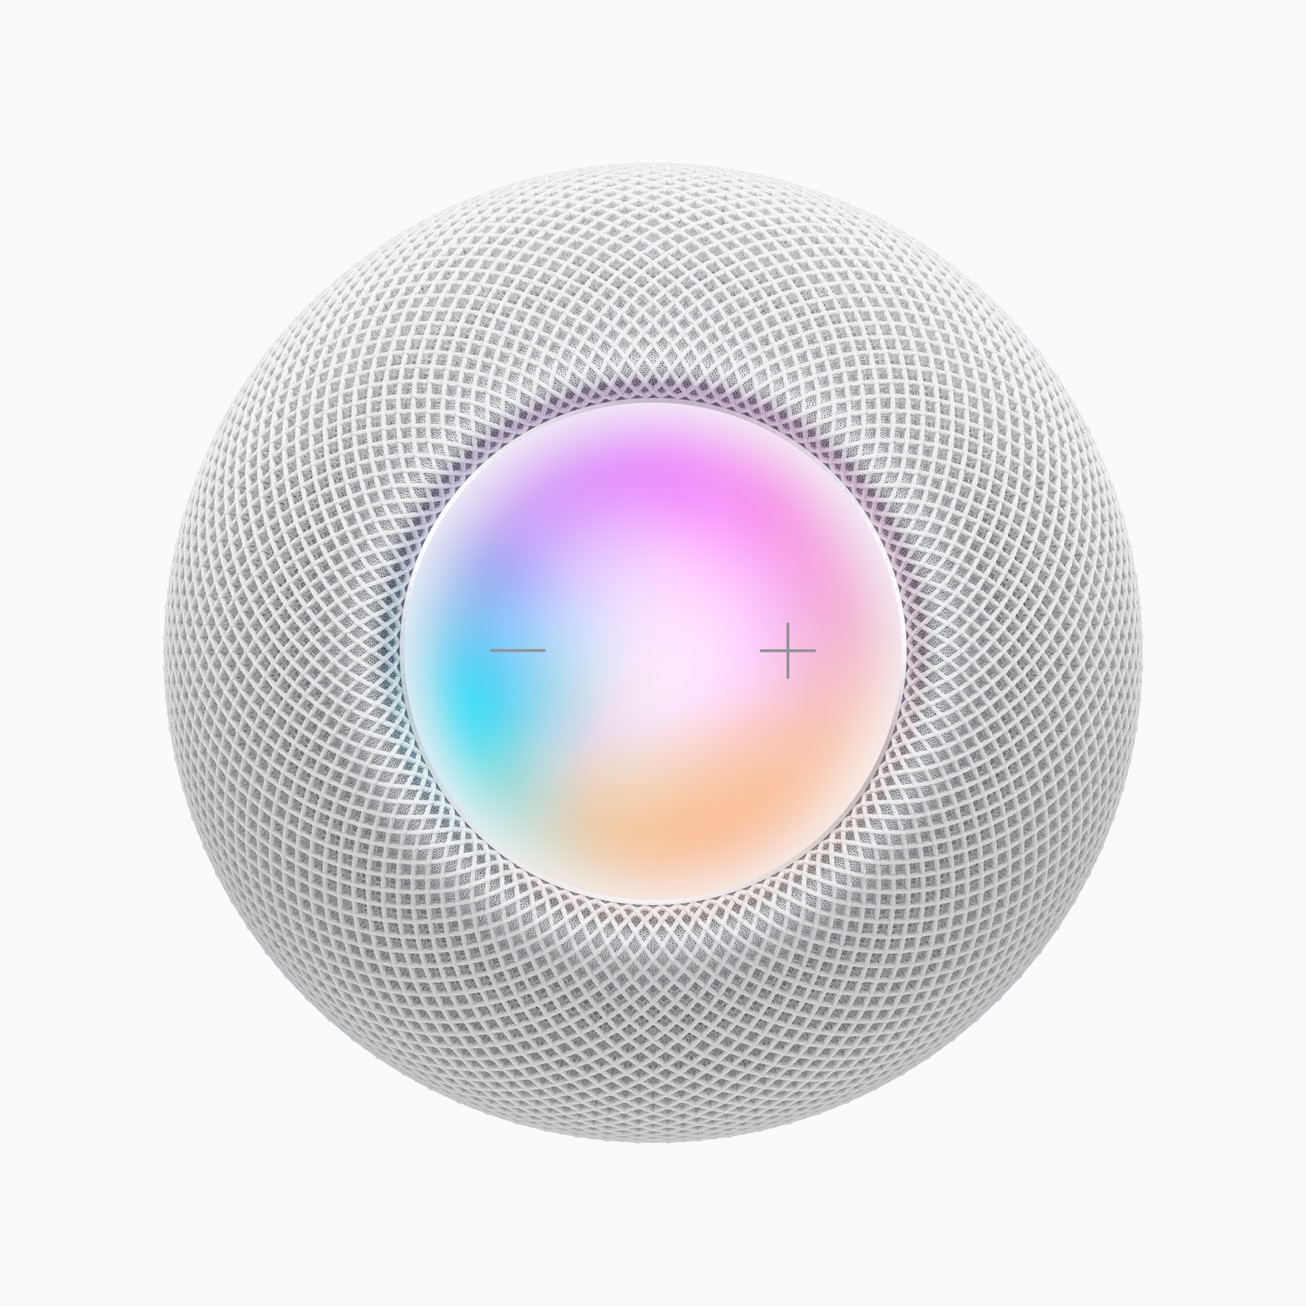 Apple Announces the All-New HomePod mini